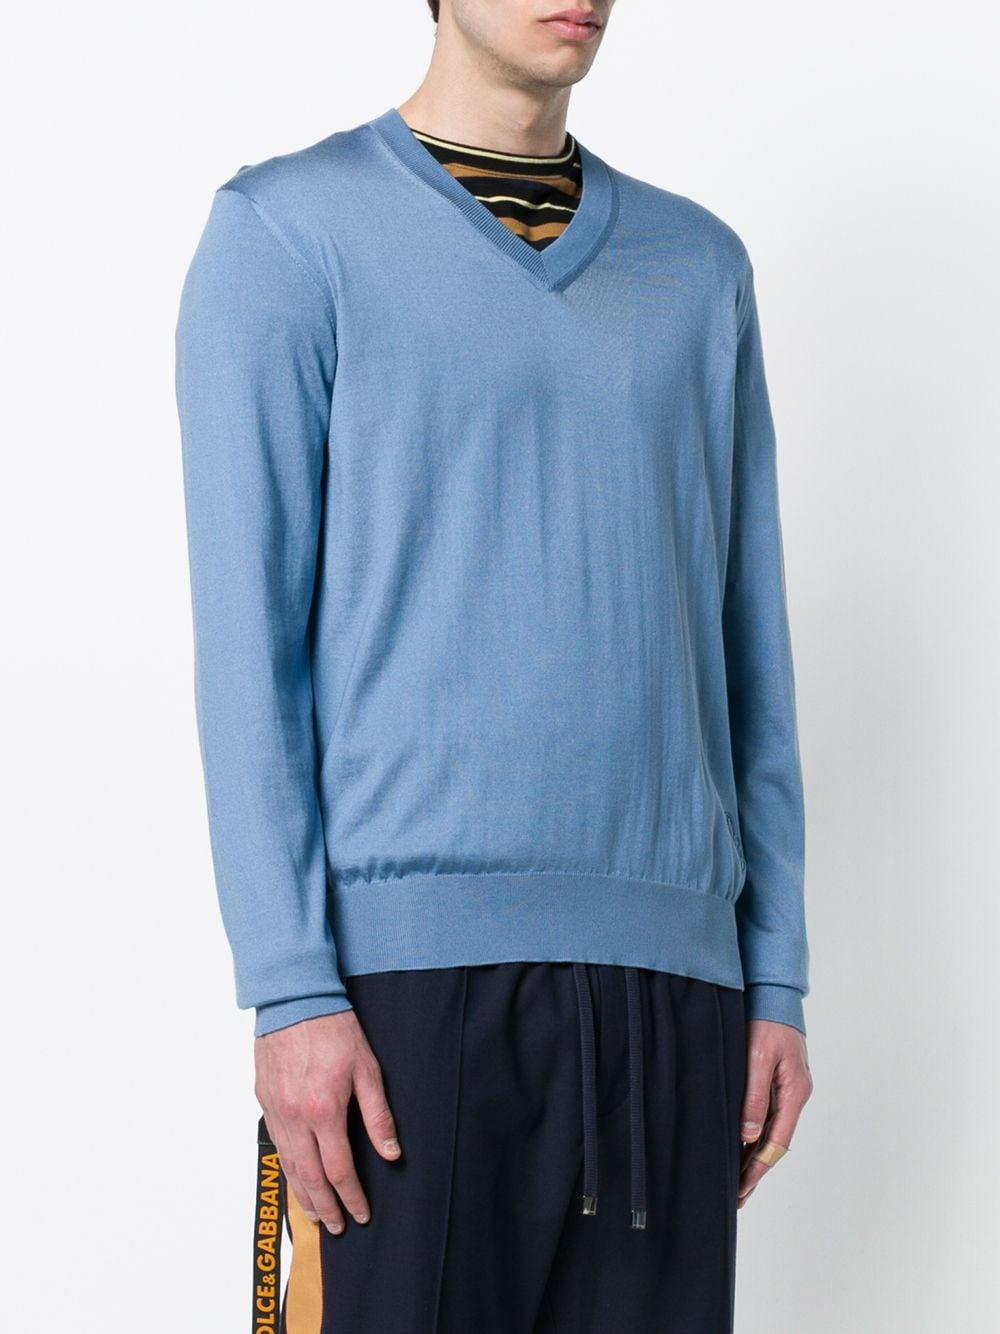 Dolce & Gabbana Silk V-neck Sweater in Blue for Men - Lyst